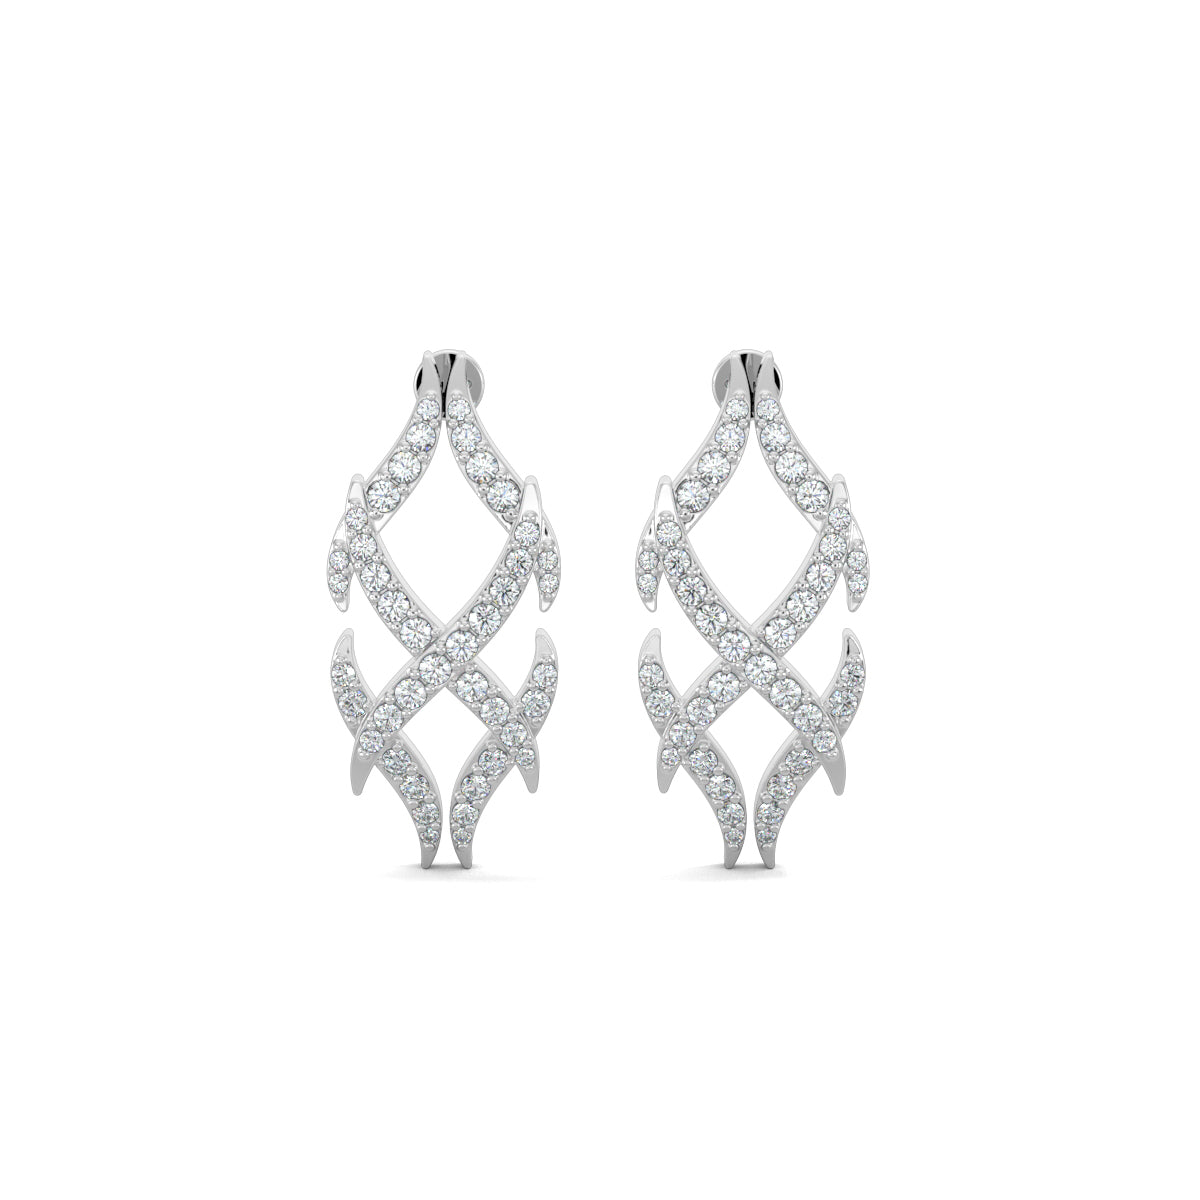 White Gold, Diamond Earrings, Italian-inspired diamond earrings, mid-length earrings, natural diamonds, lab-grown diamonds, Bella Luce Earrings, elegant jewelry, sophisticated earrings, Italian design inspired earrings.